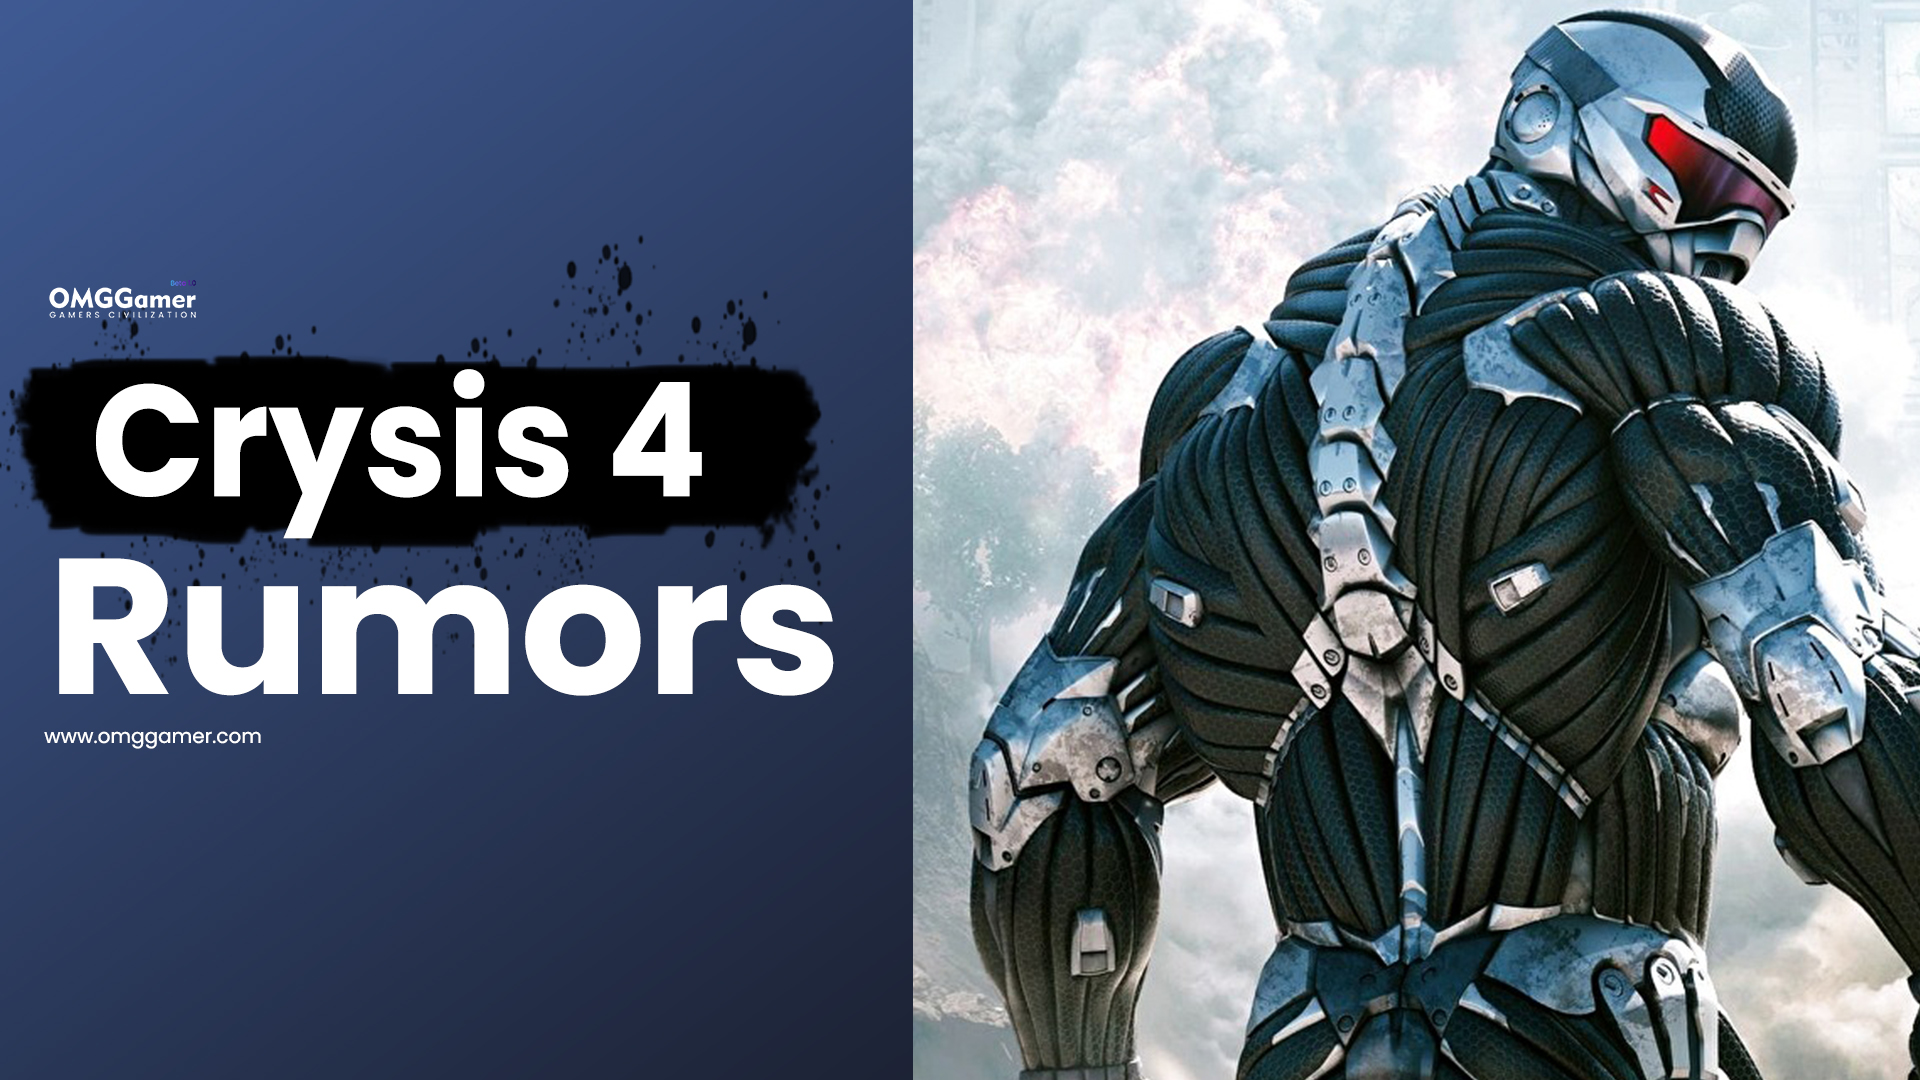 Crysis 4 Rumors